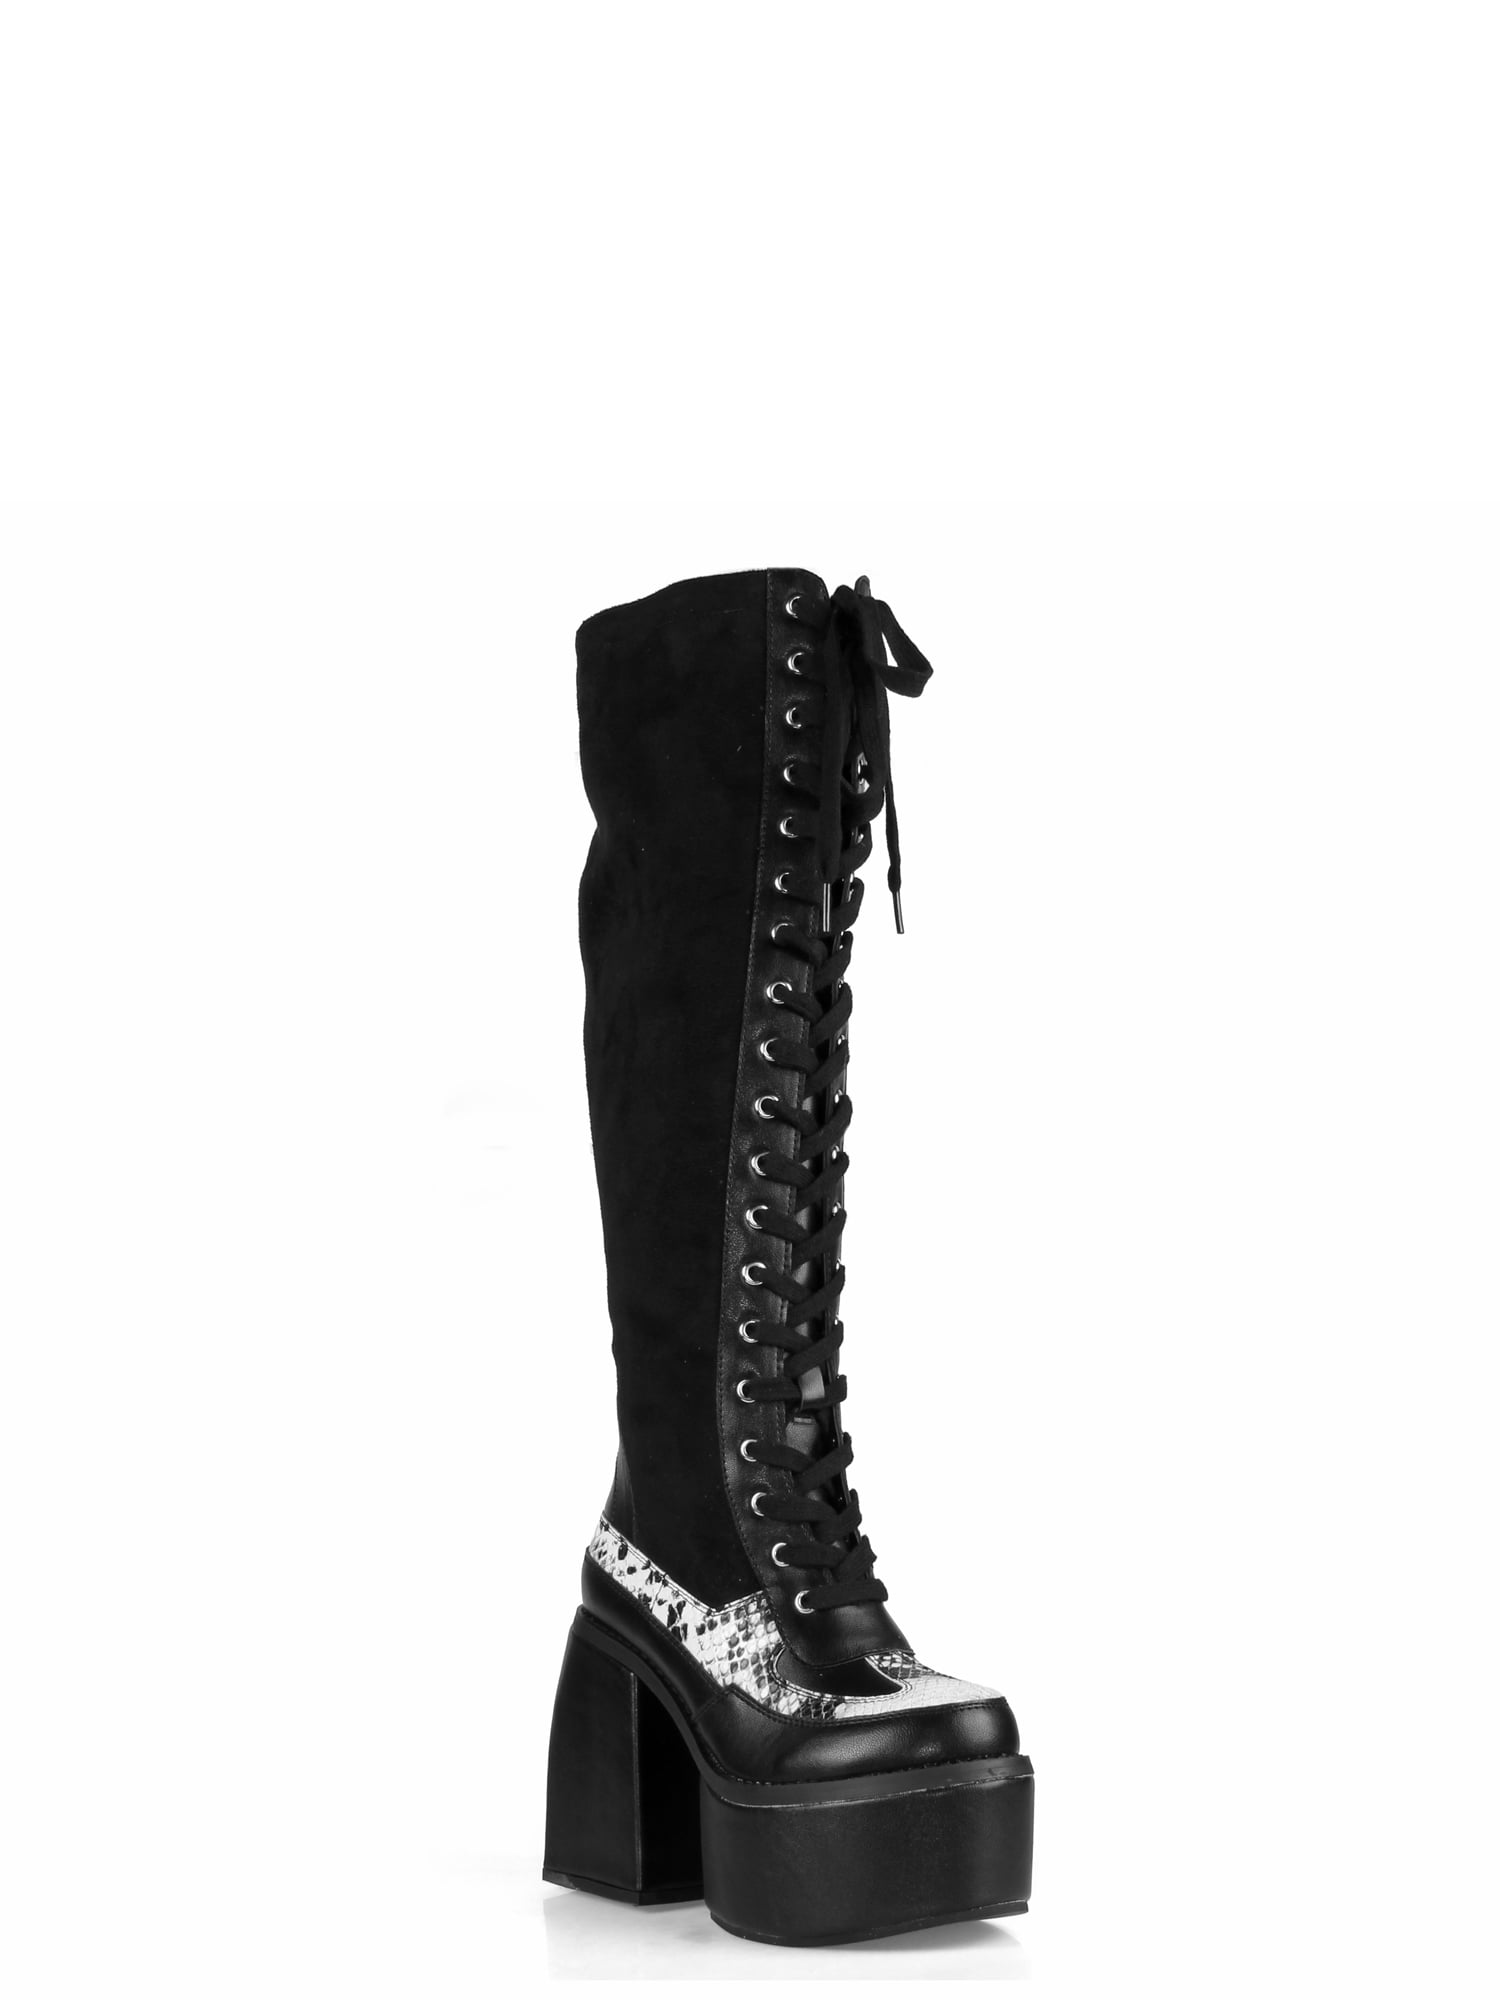 Womens Knee Length Black Leather Boots Designer NEW ROCK Gothic Retro Block Heel 